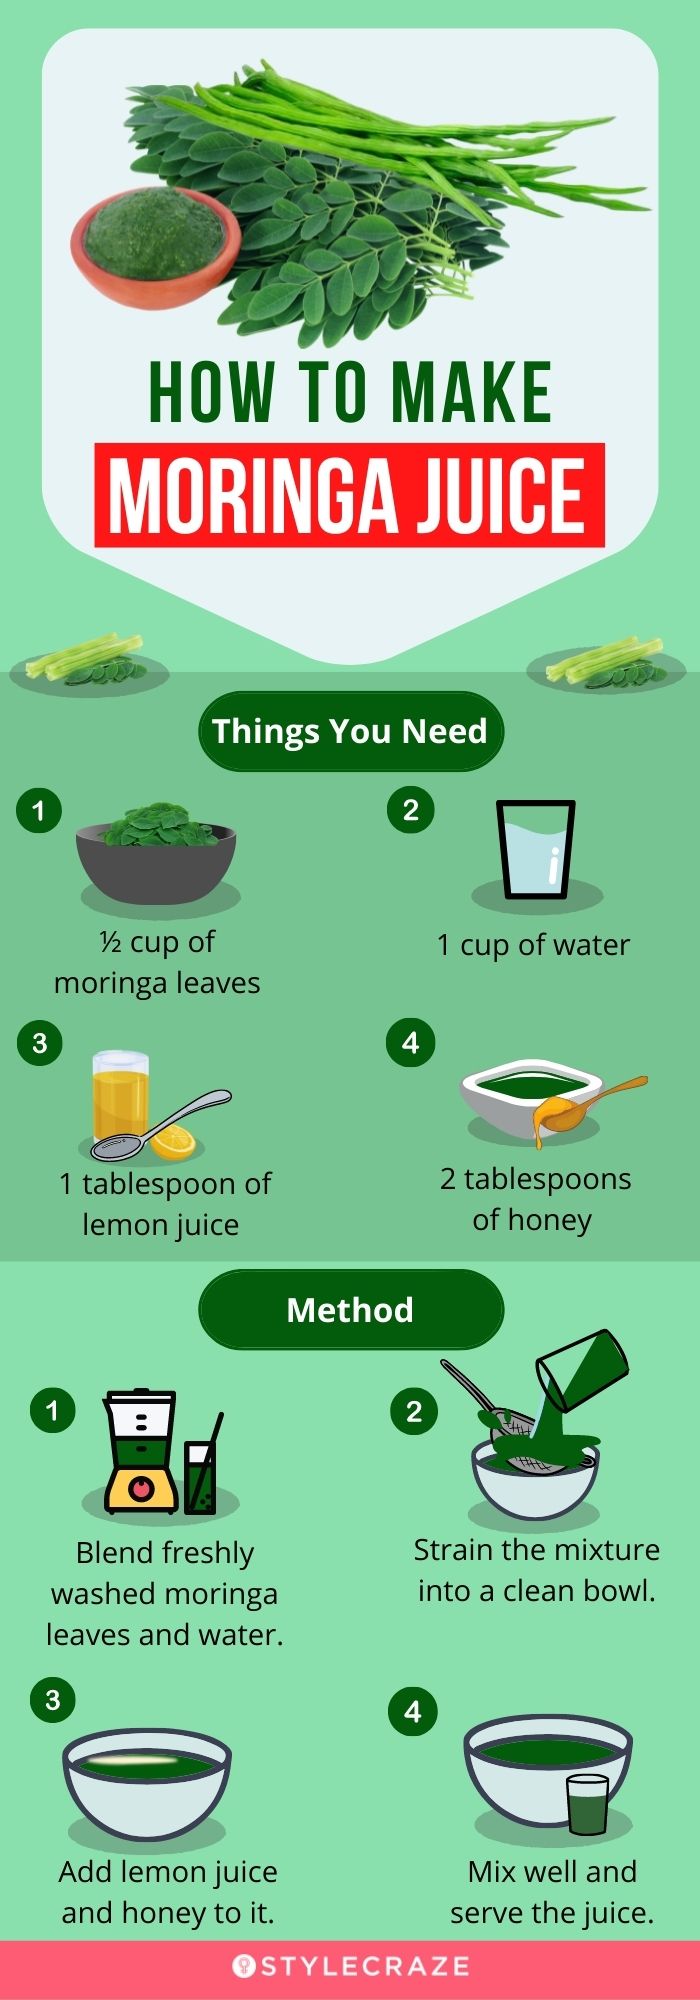 how to make moringa juice (infographic)